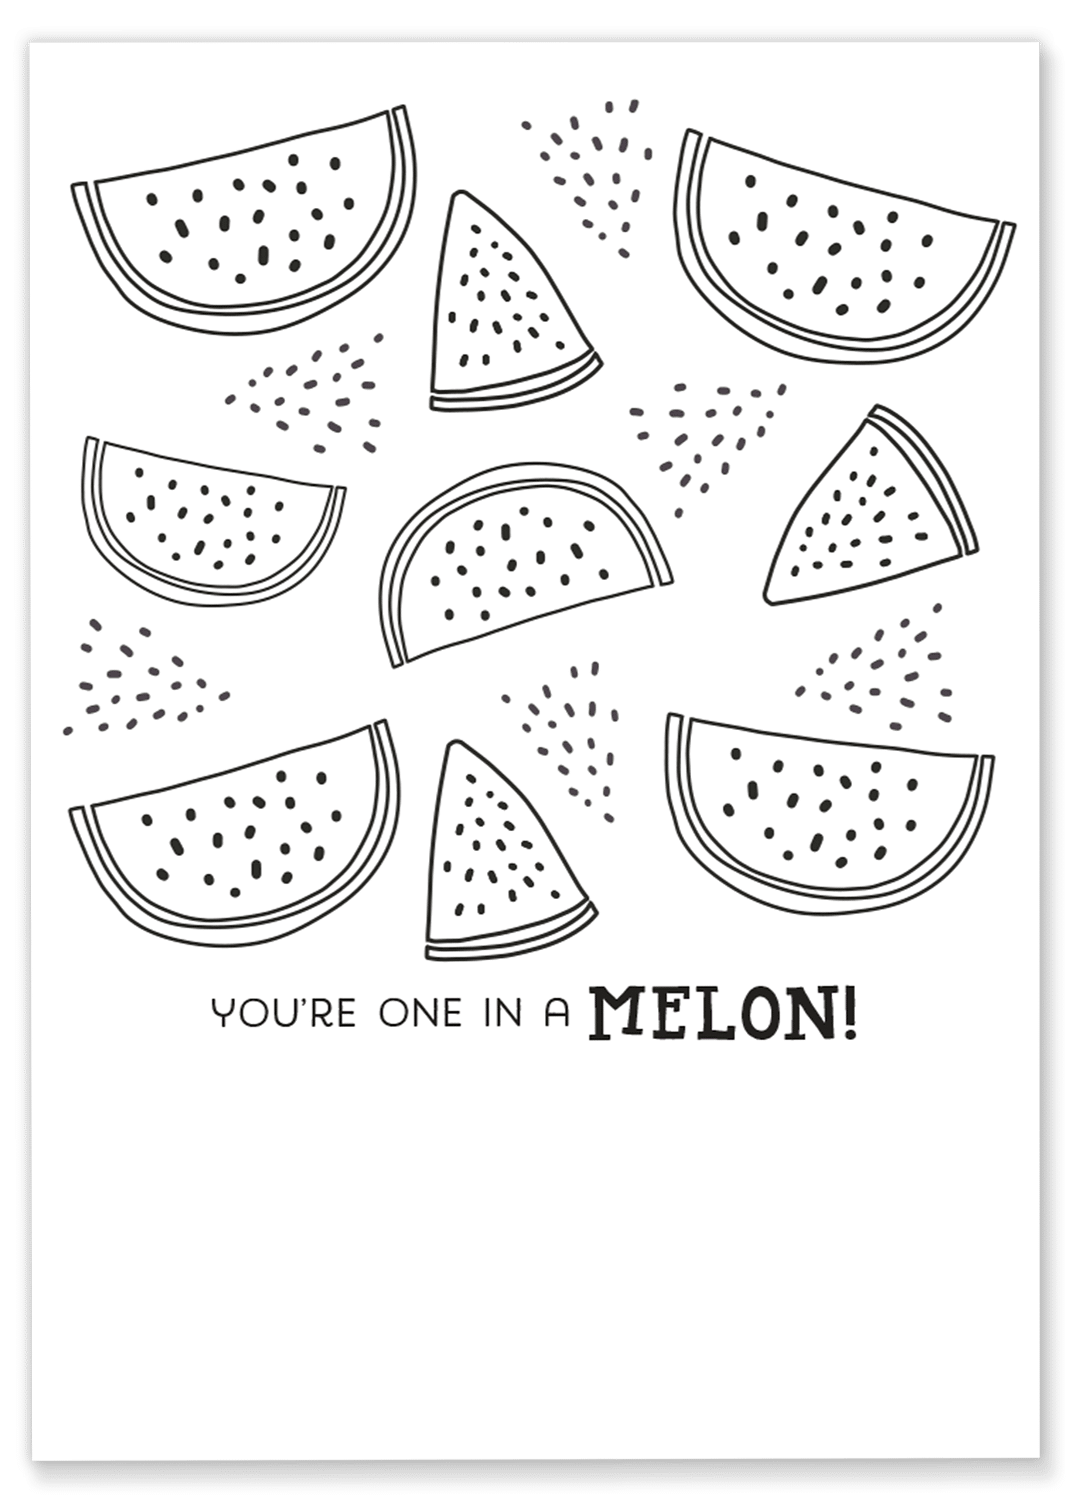 Watermelon coloring sheet â gilm press